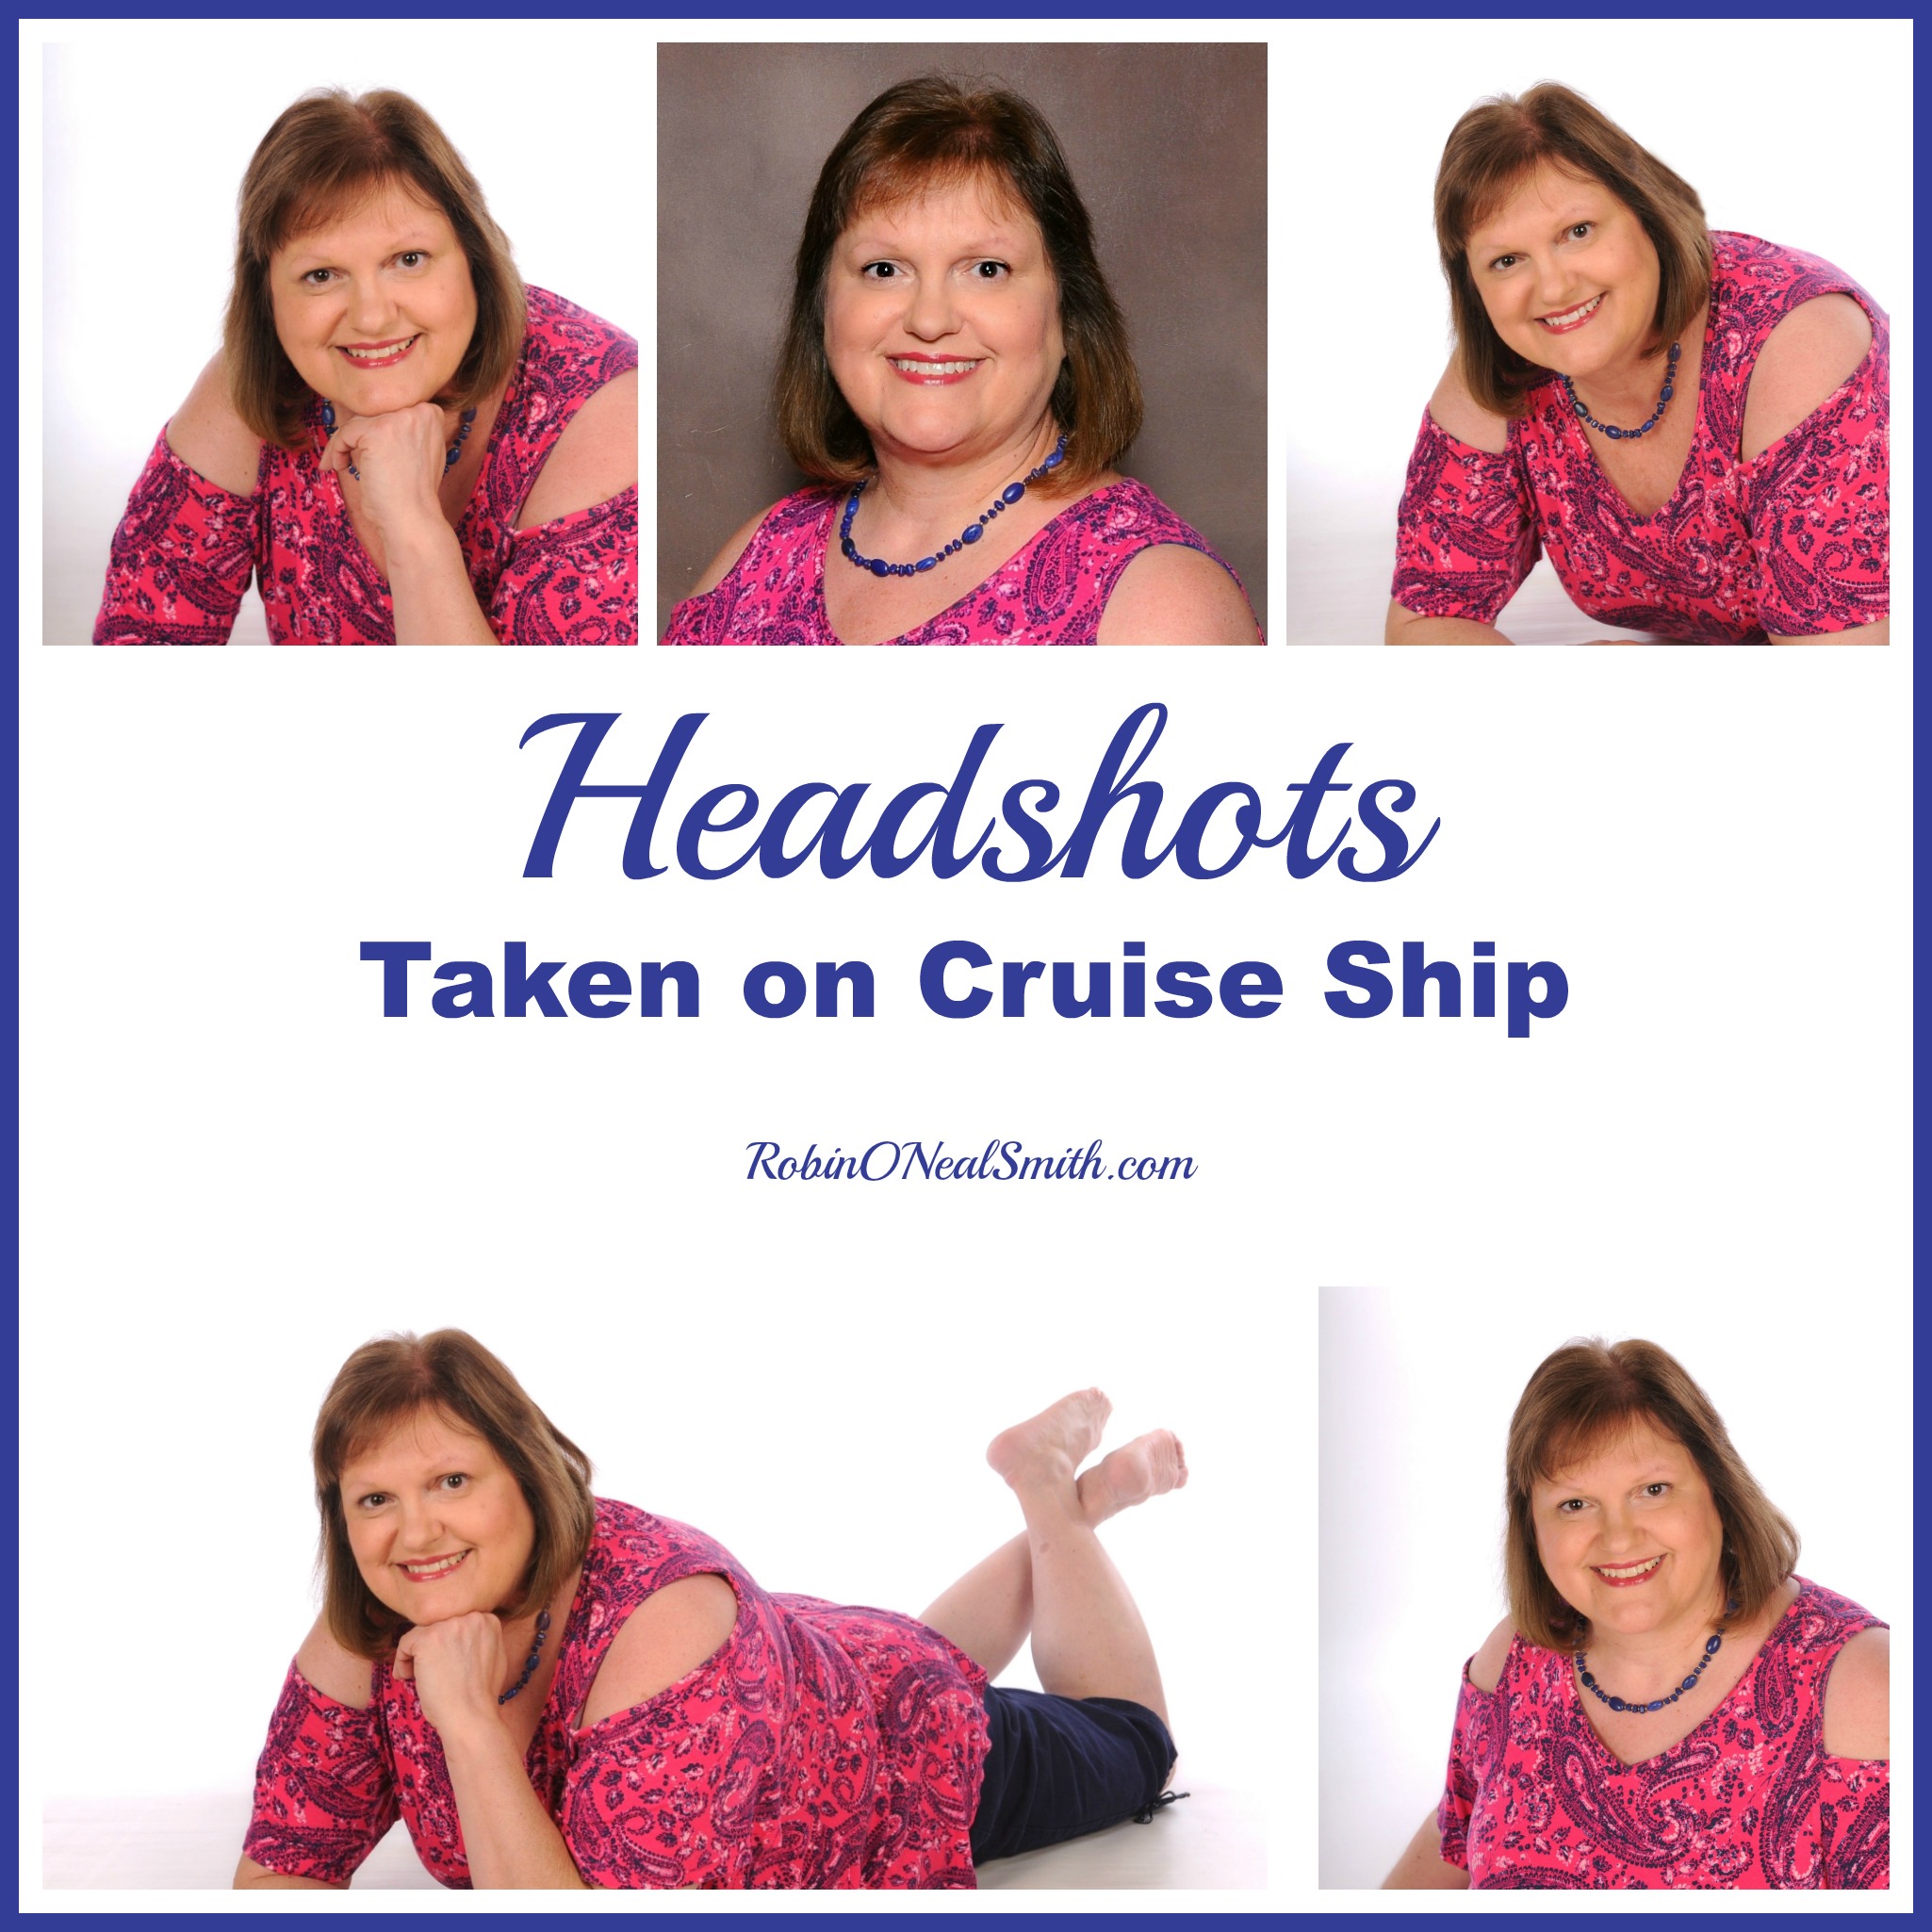 Cruise Photo package - headshots